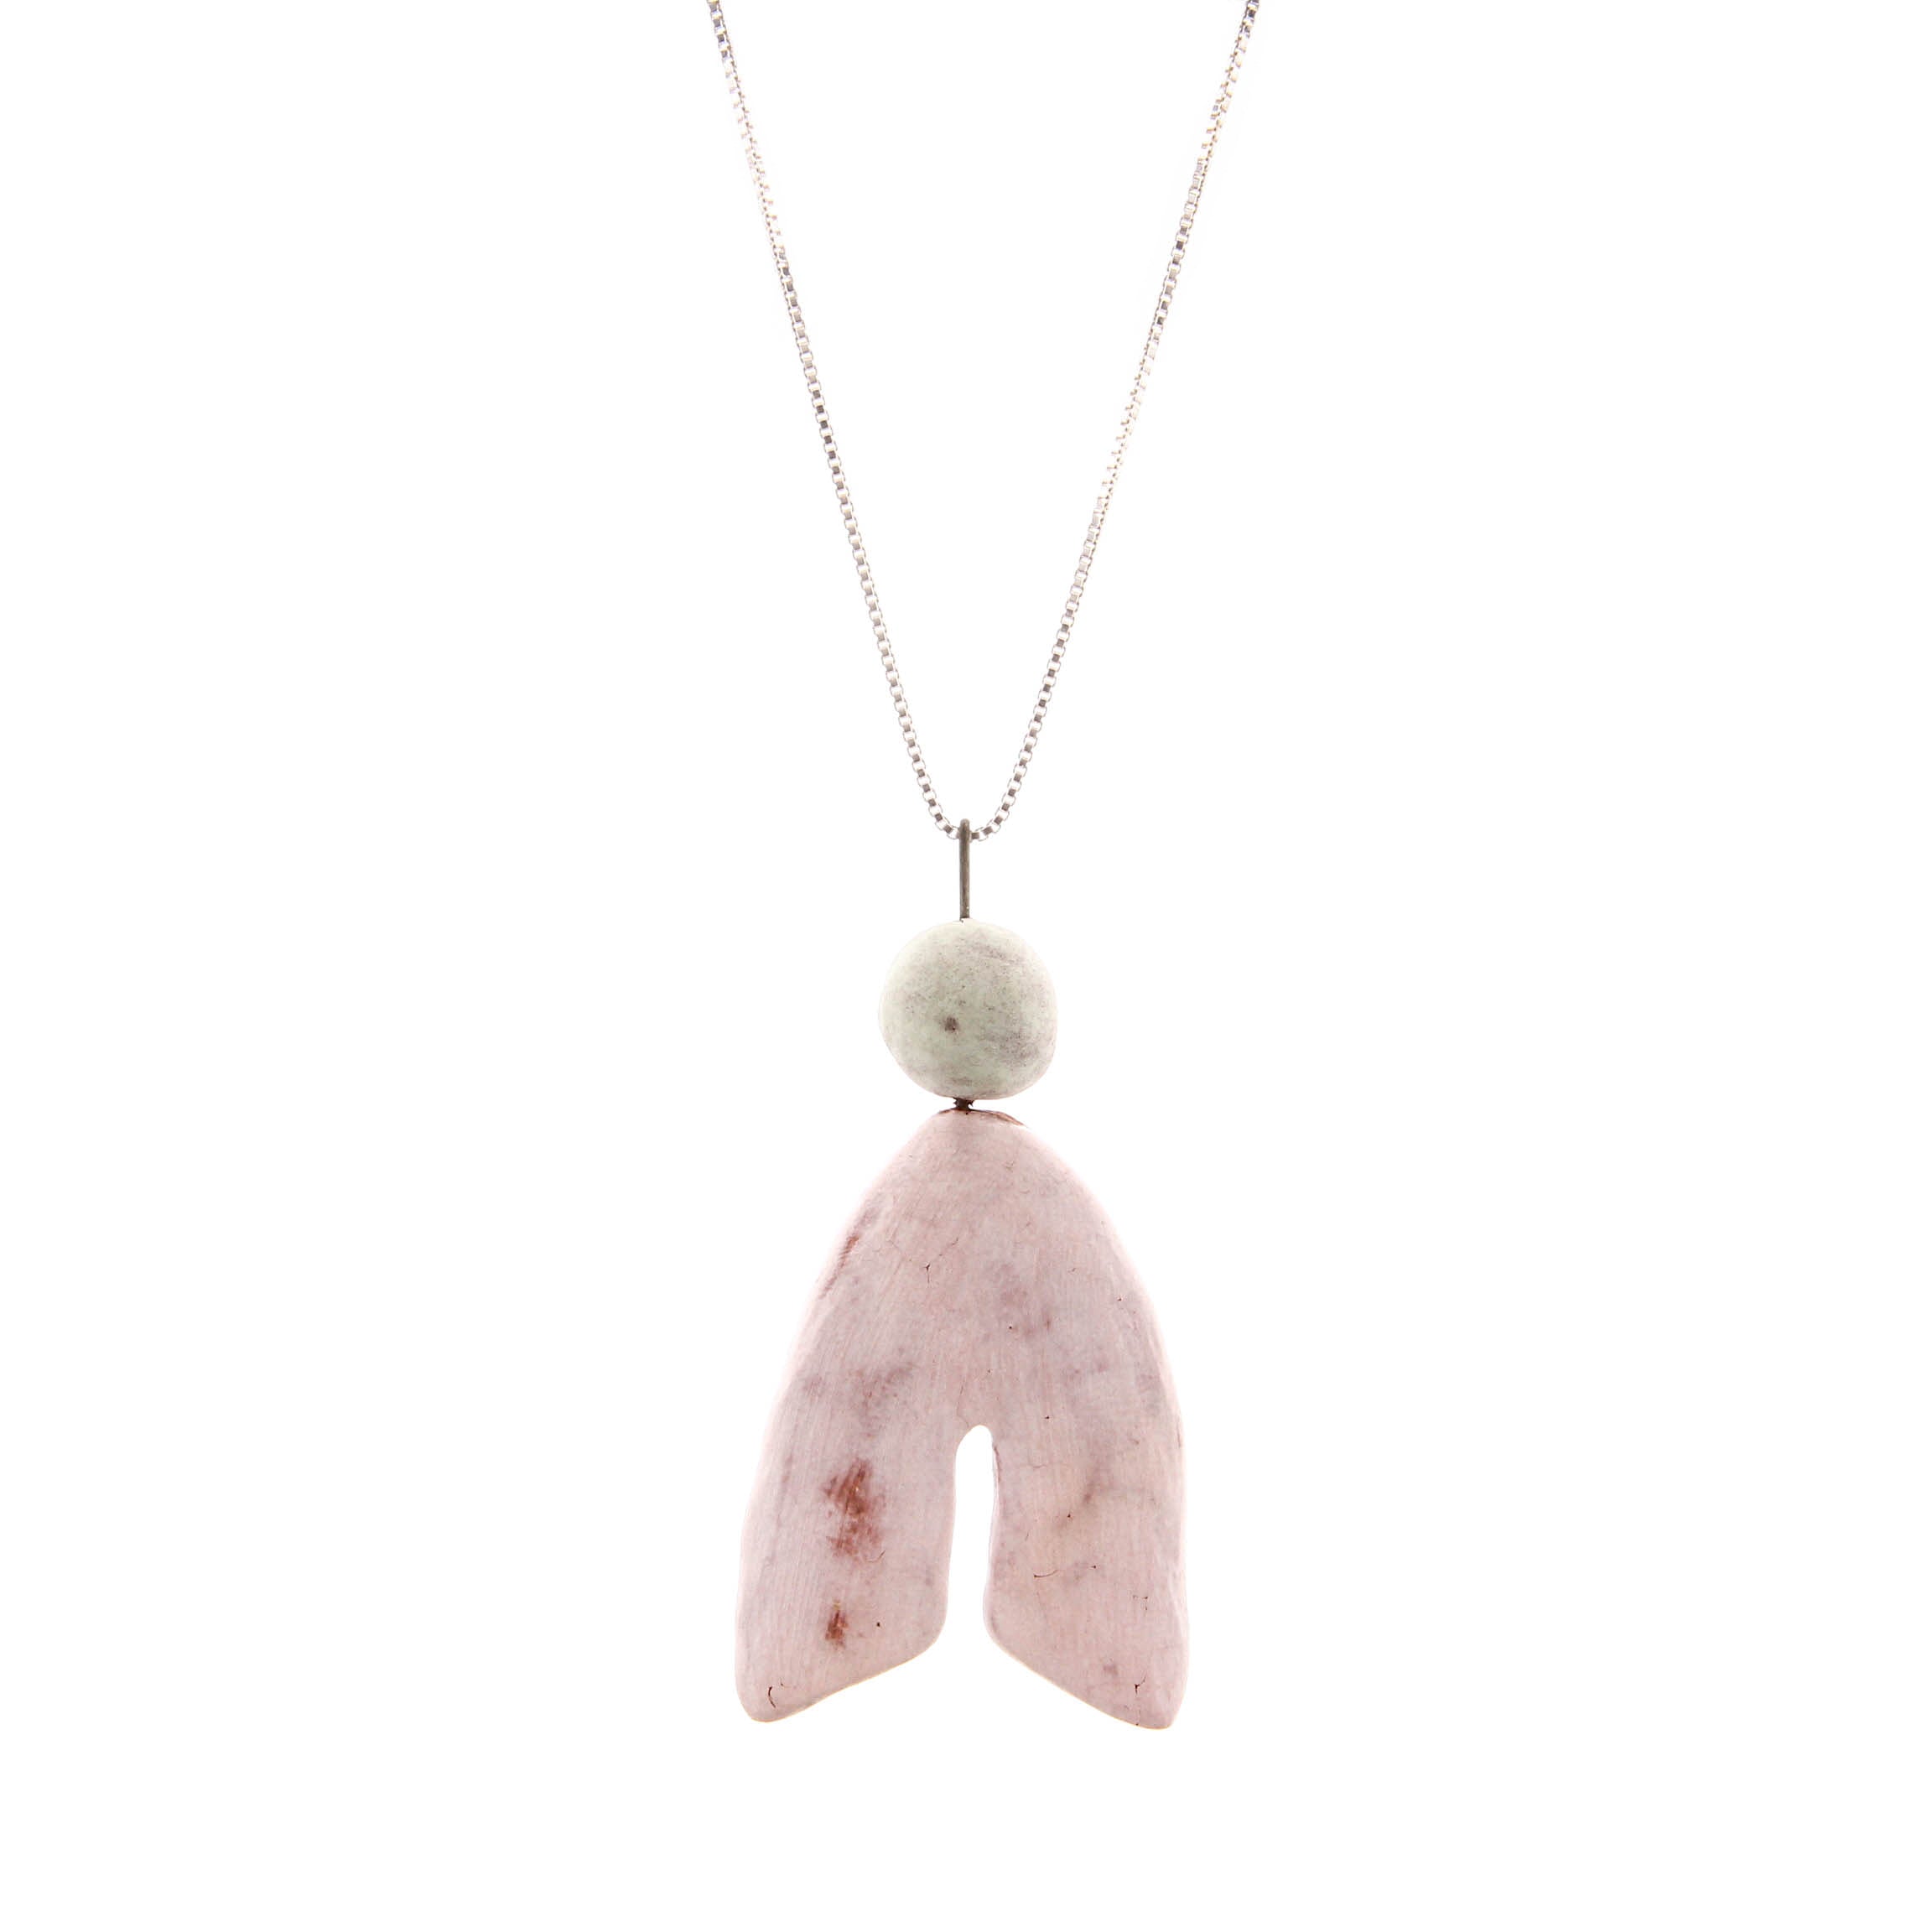 Tara Underwood, Ceramic Pendant Necklace in Pink and White